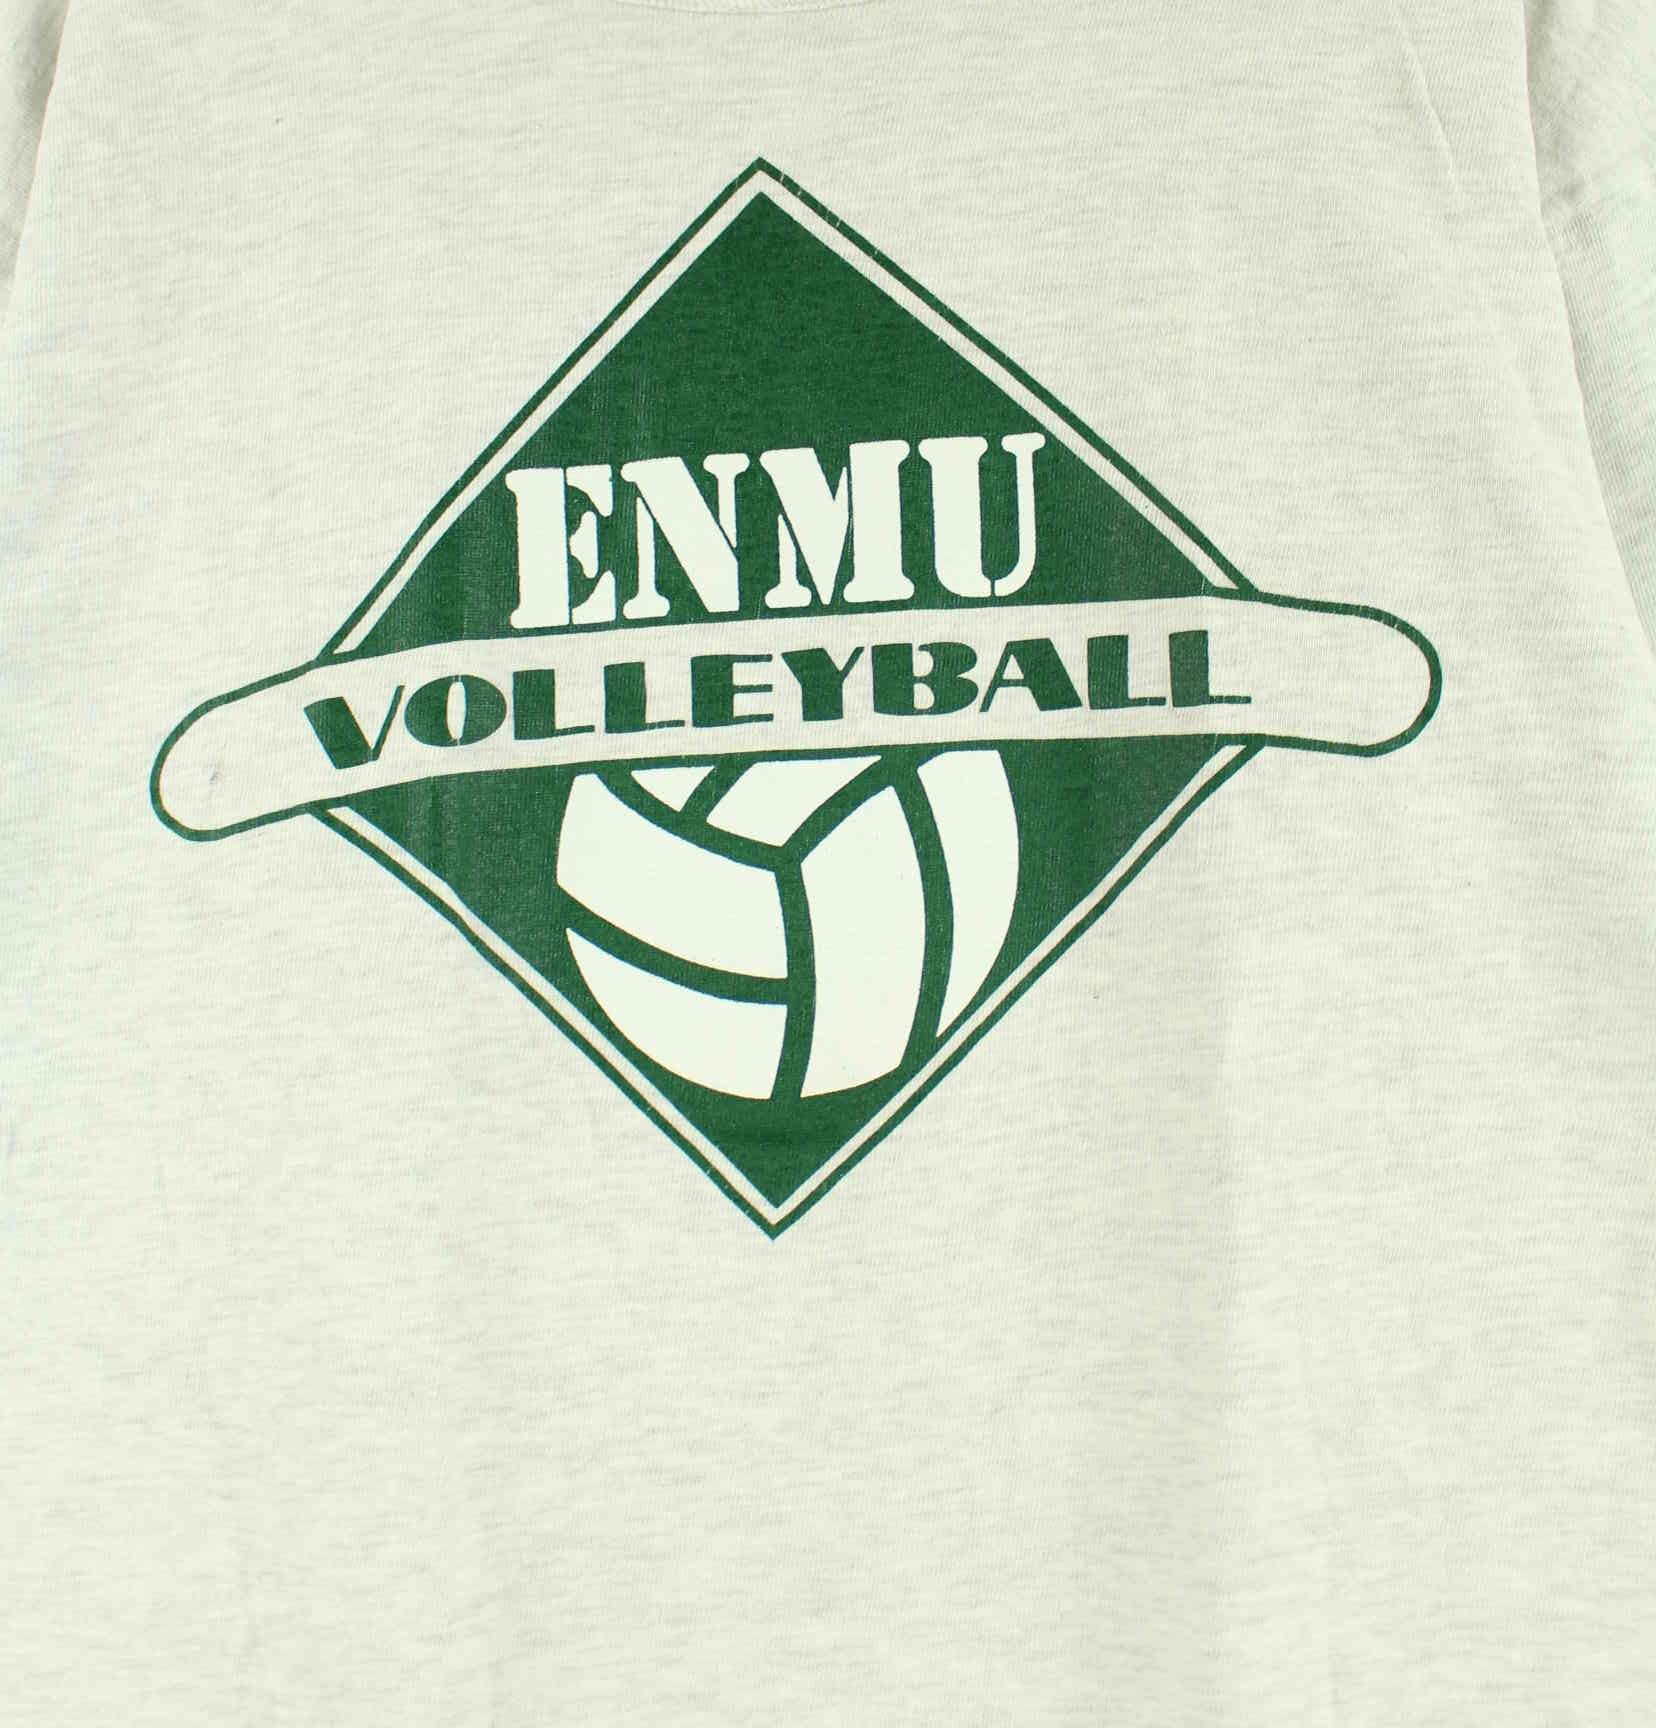 Champion ENMU Volleyball Print Single Stitch T-Shirt Grau XL (detail image 1)